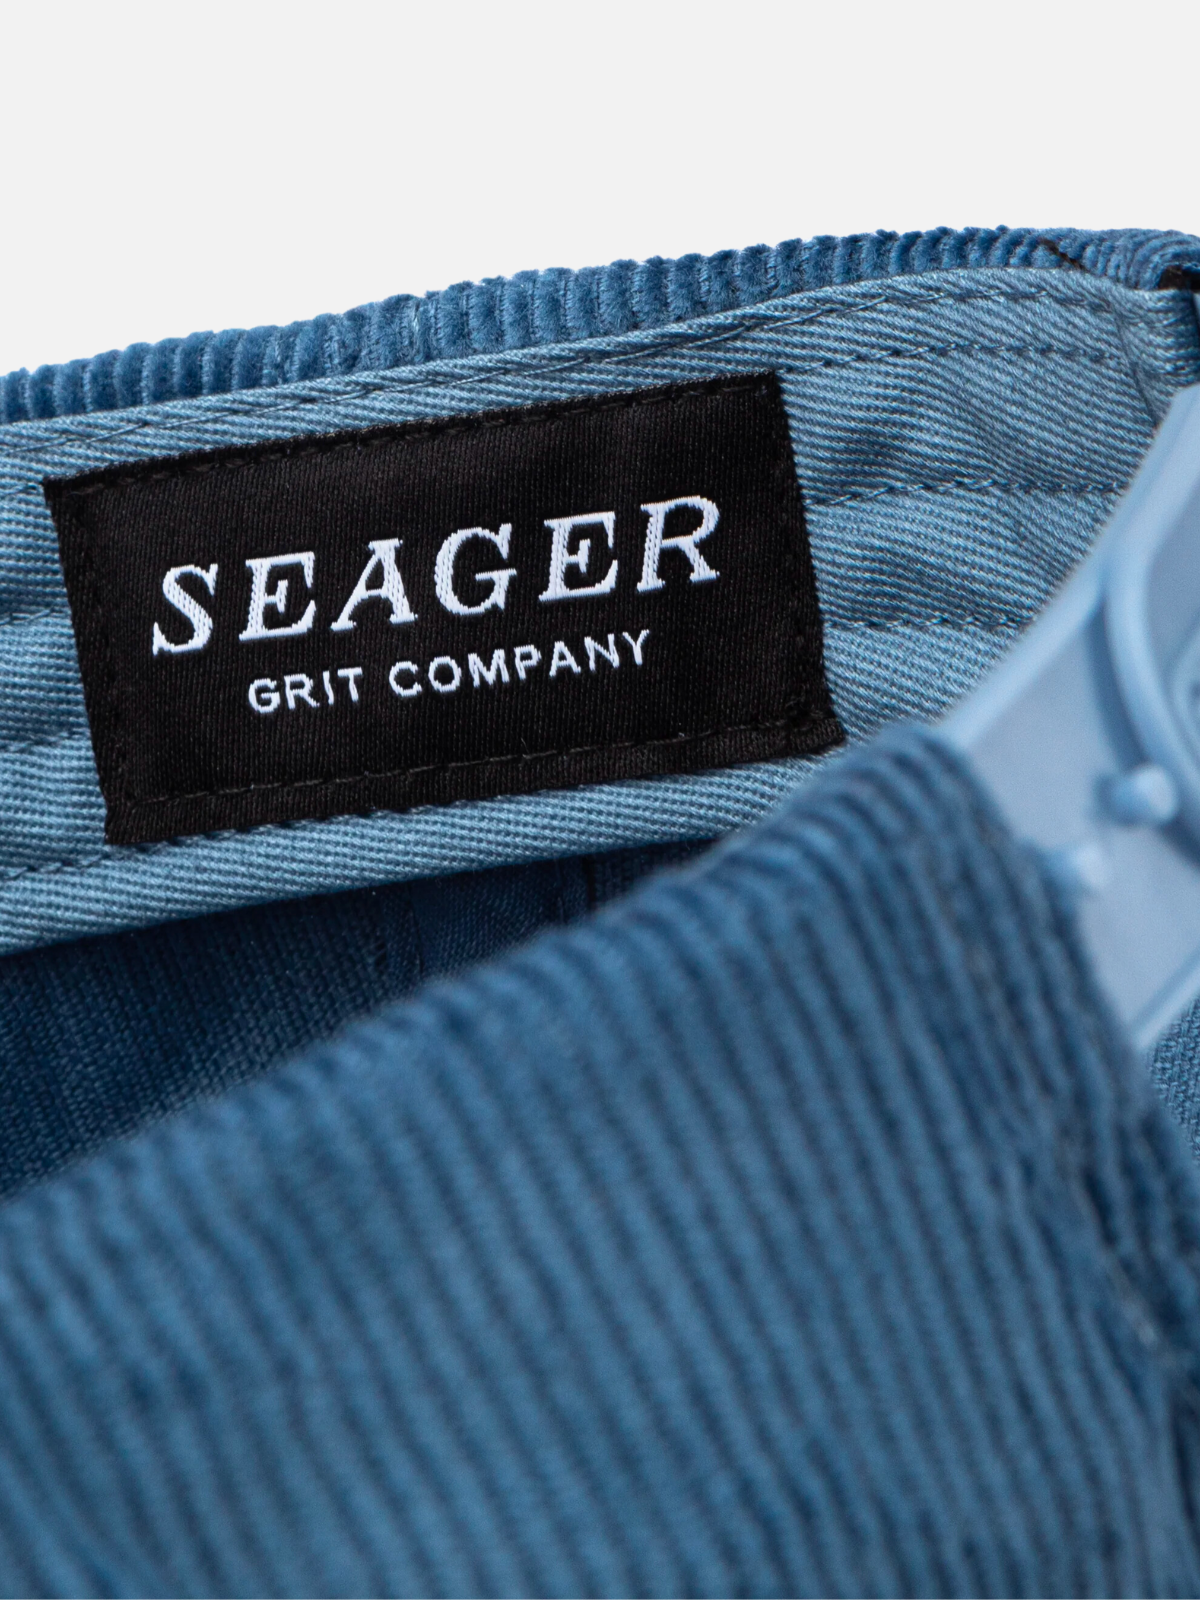 seager big blue cotton corduroy snapback hat white embroidered design kempt athens ga georgia men's clothing store